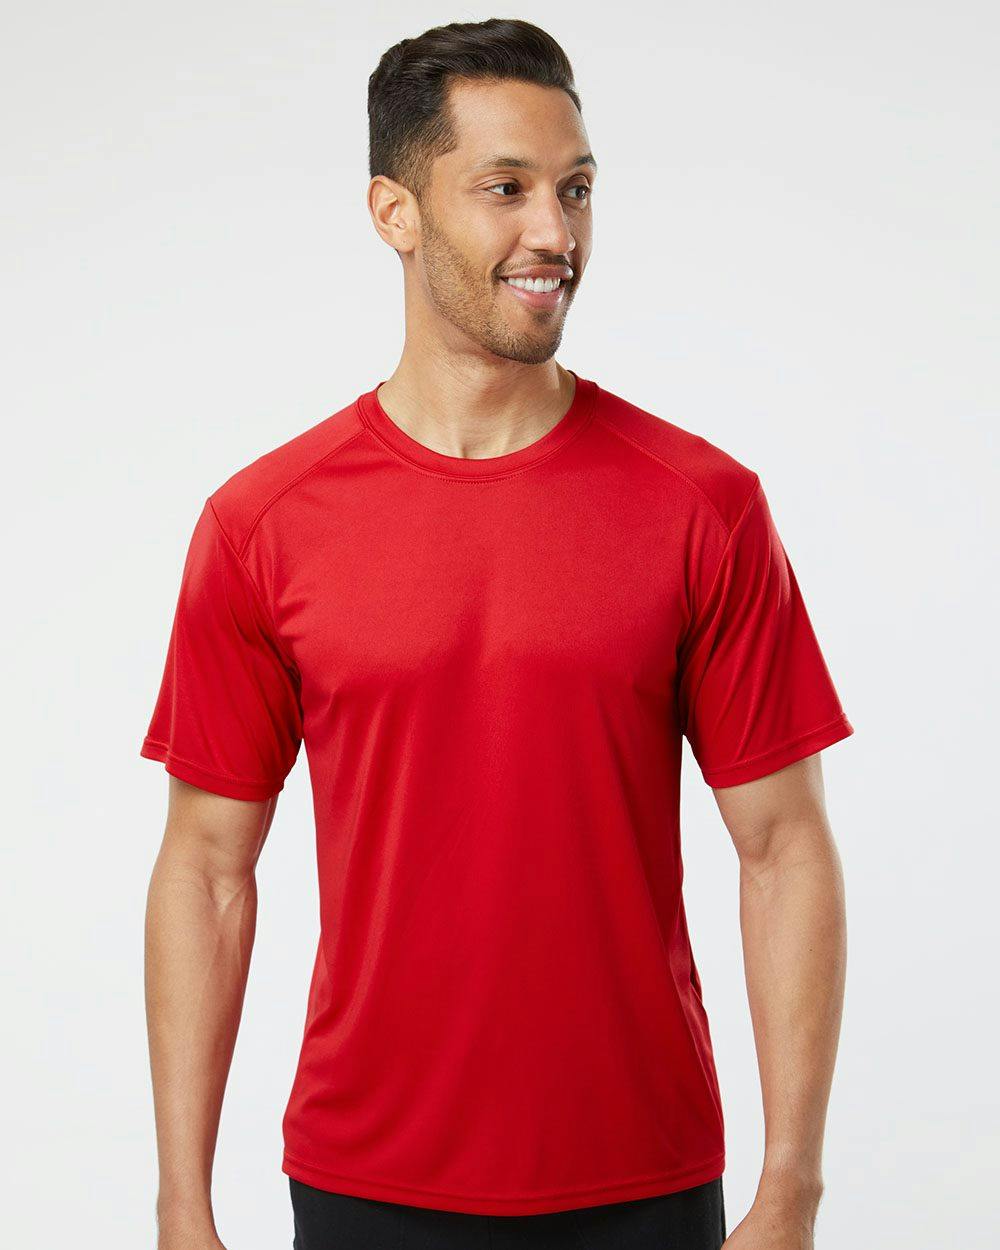 Image for Islander Performance T-Shirt - 200